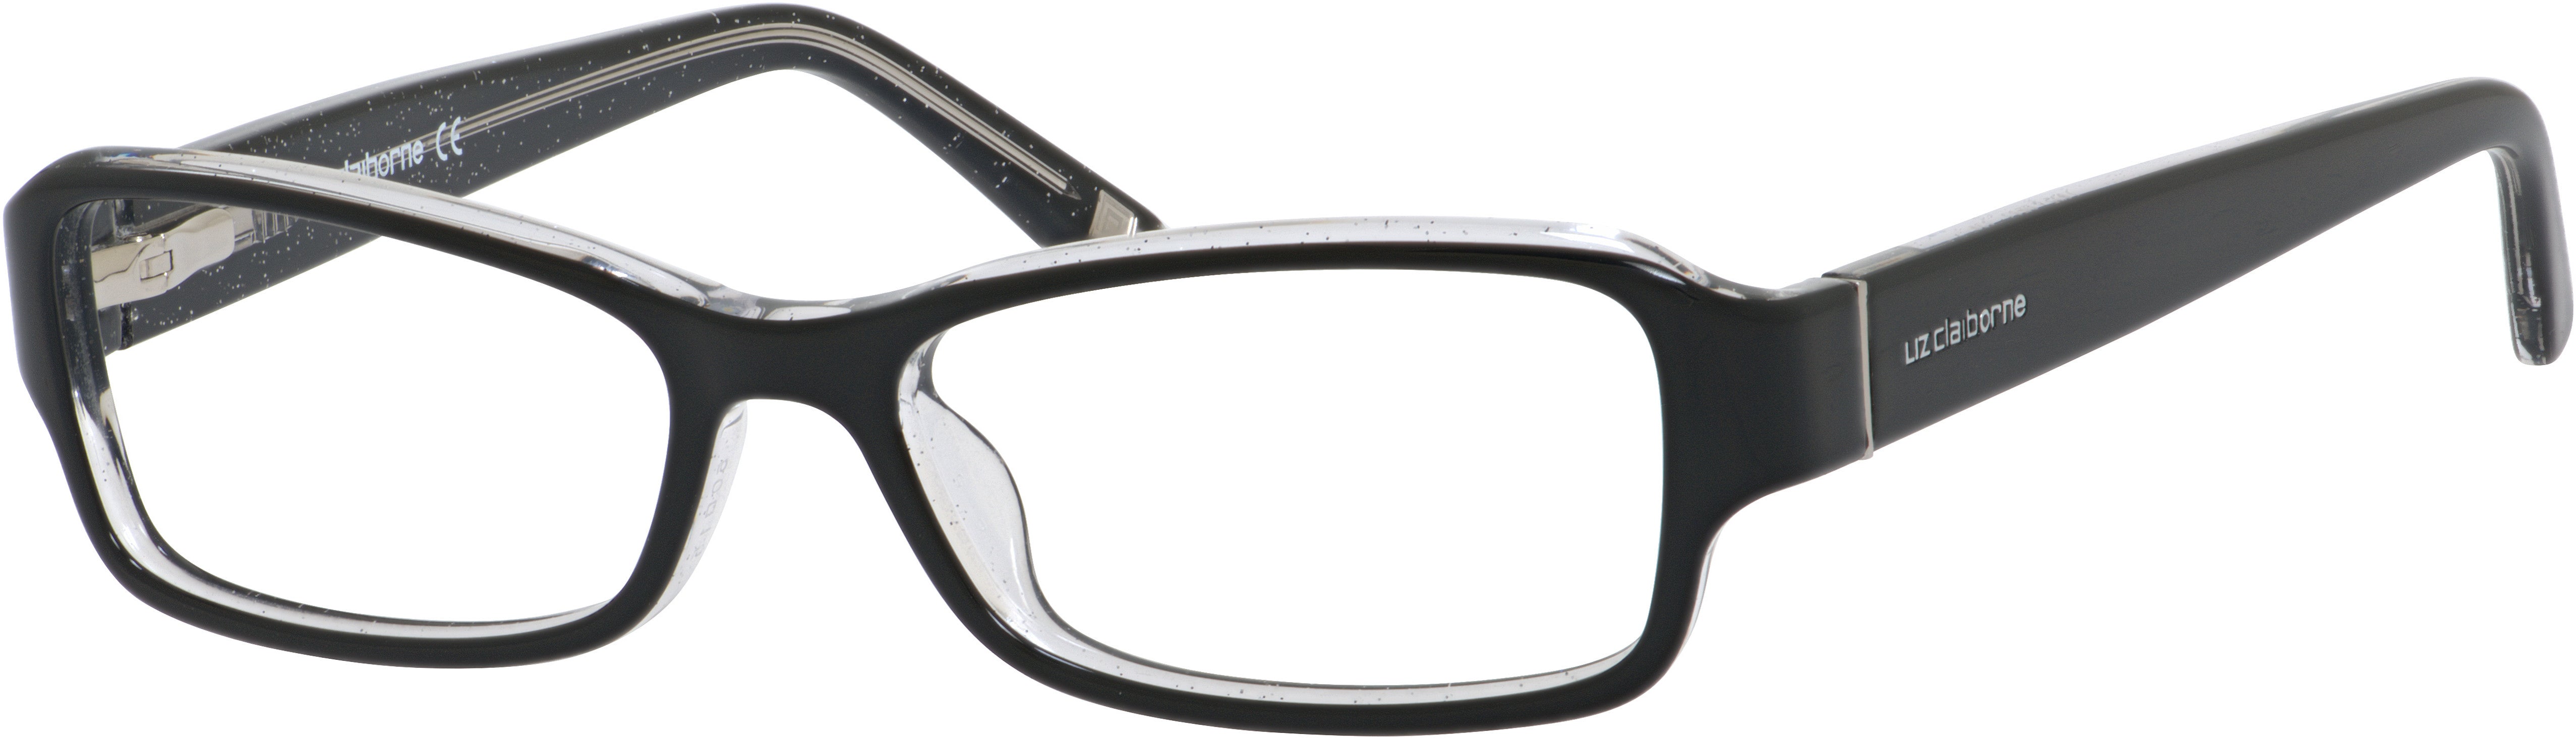  Liz Claiborne 435 Rectangular Eyeglasses 0EA1-0EA1  Black Crystal Glitter (00 Demo Lens)